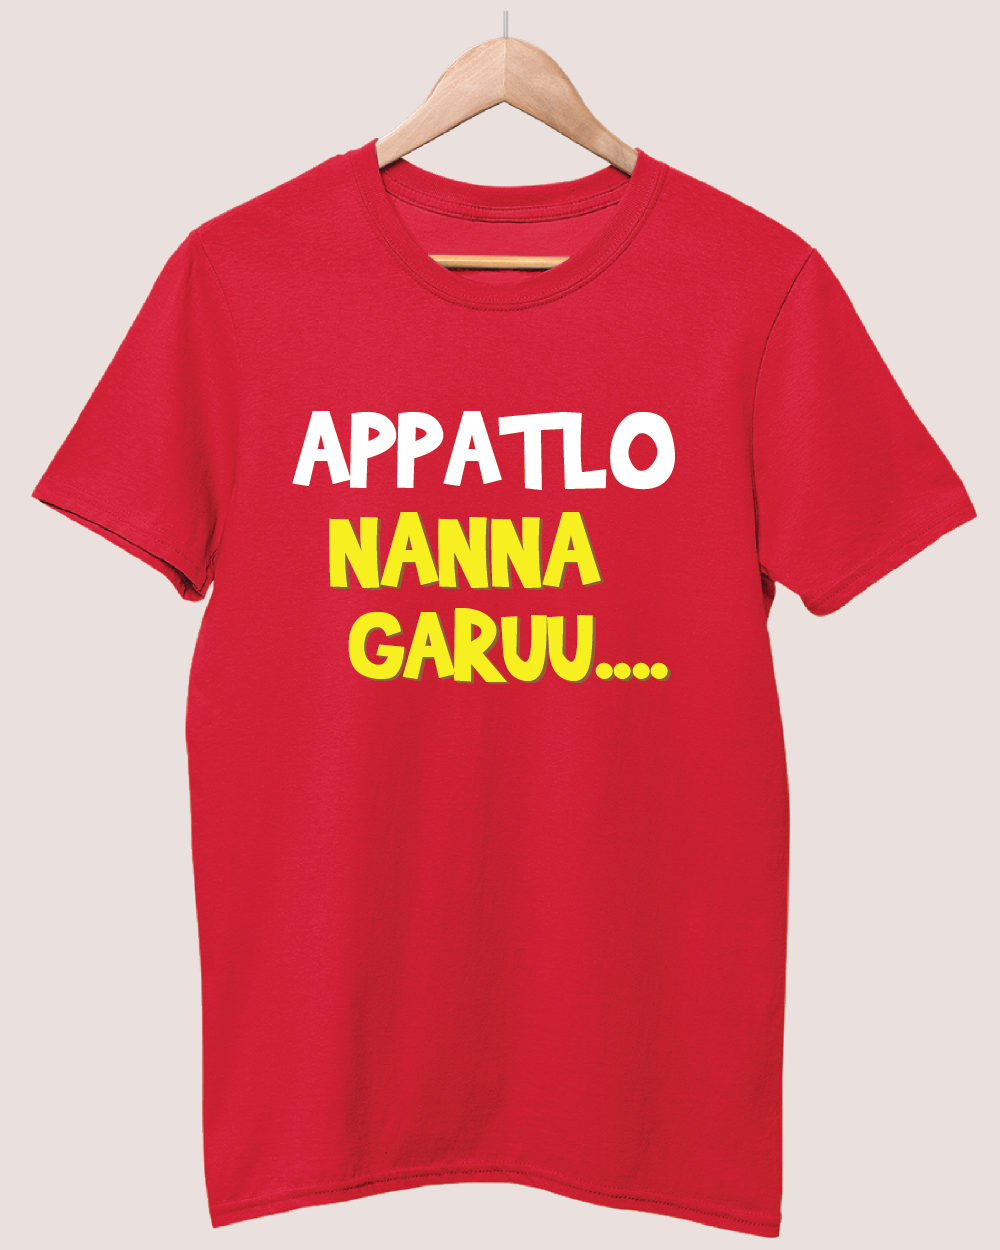 Appatlo Nanna Garu T-shirt